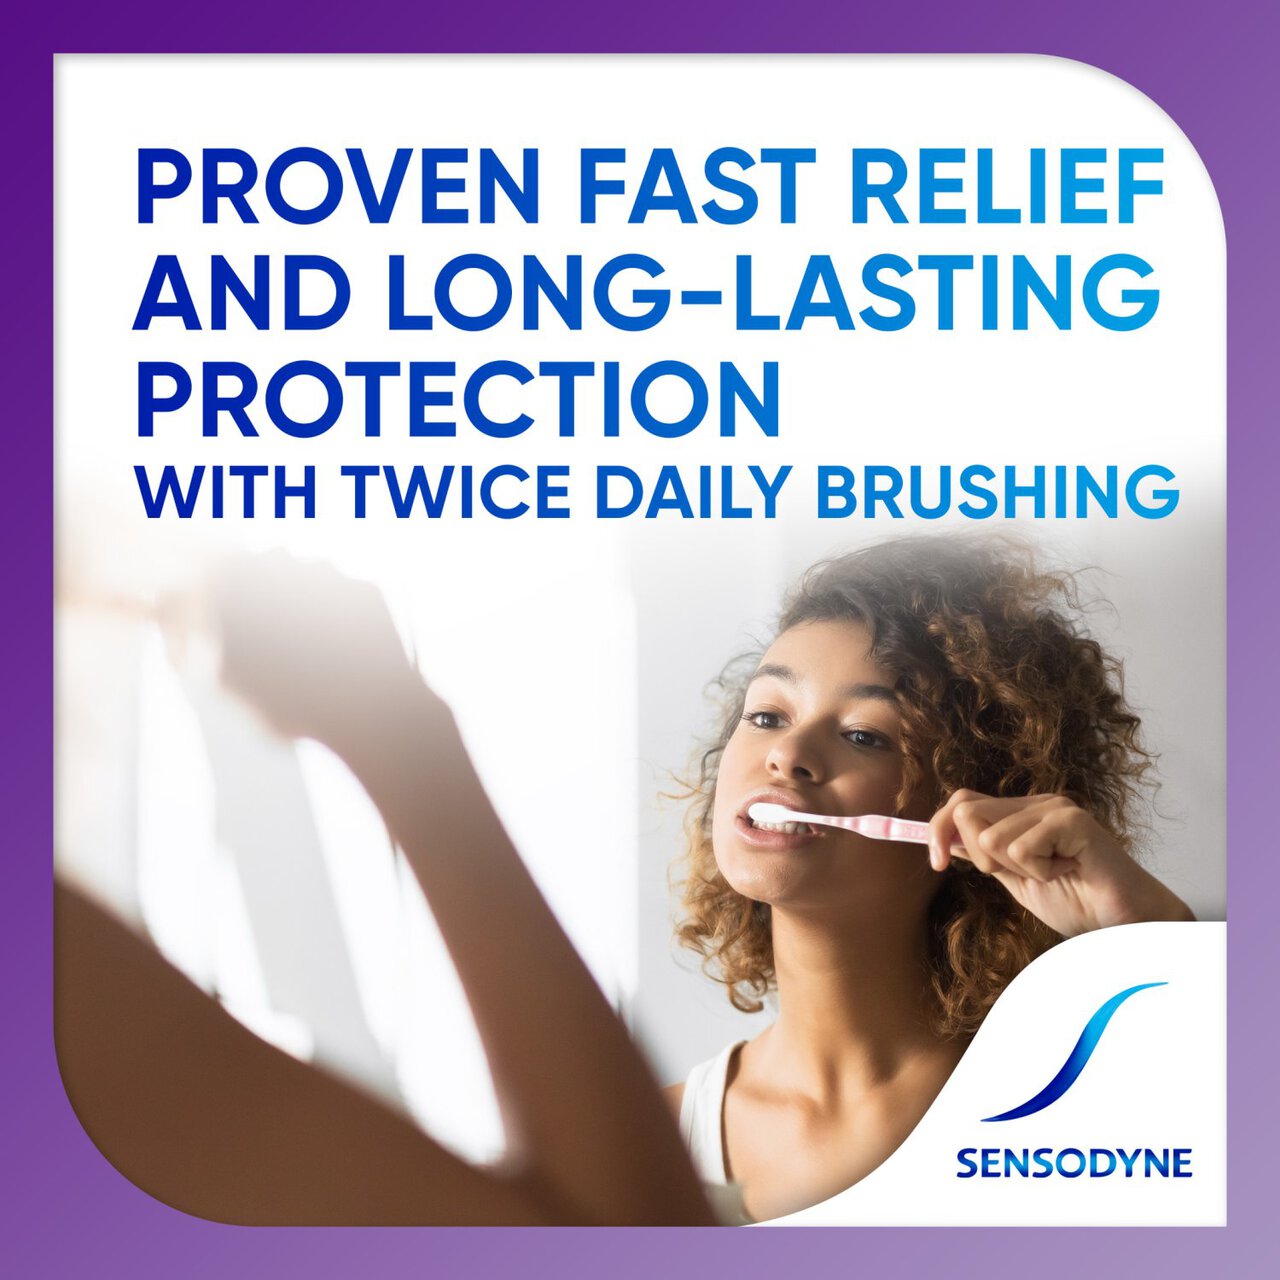 Sensodyne Rapid Relief Whitening Sensitive Toothpaste 75ml